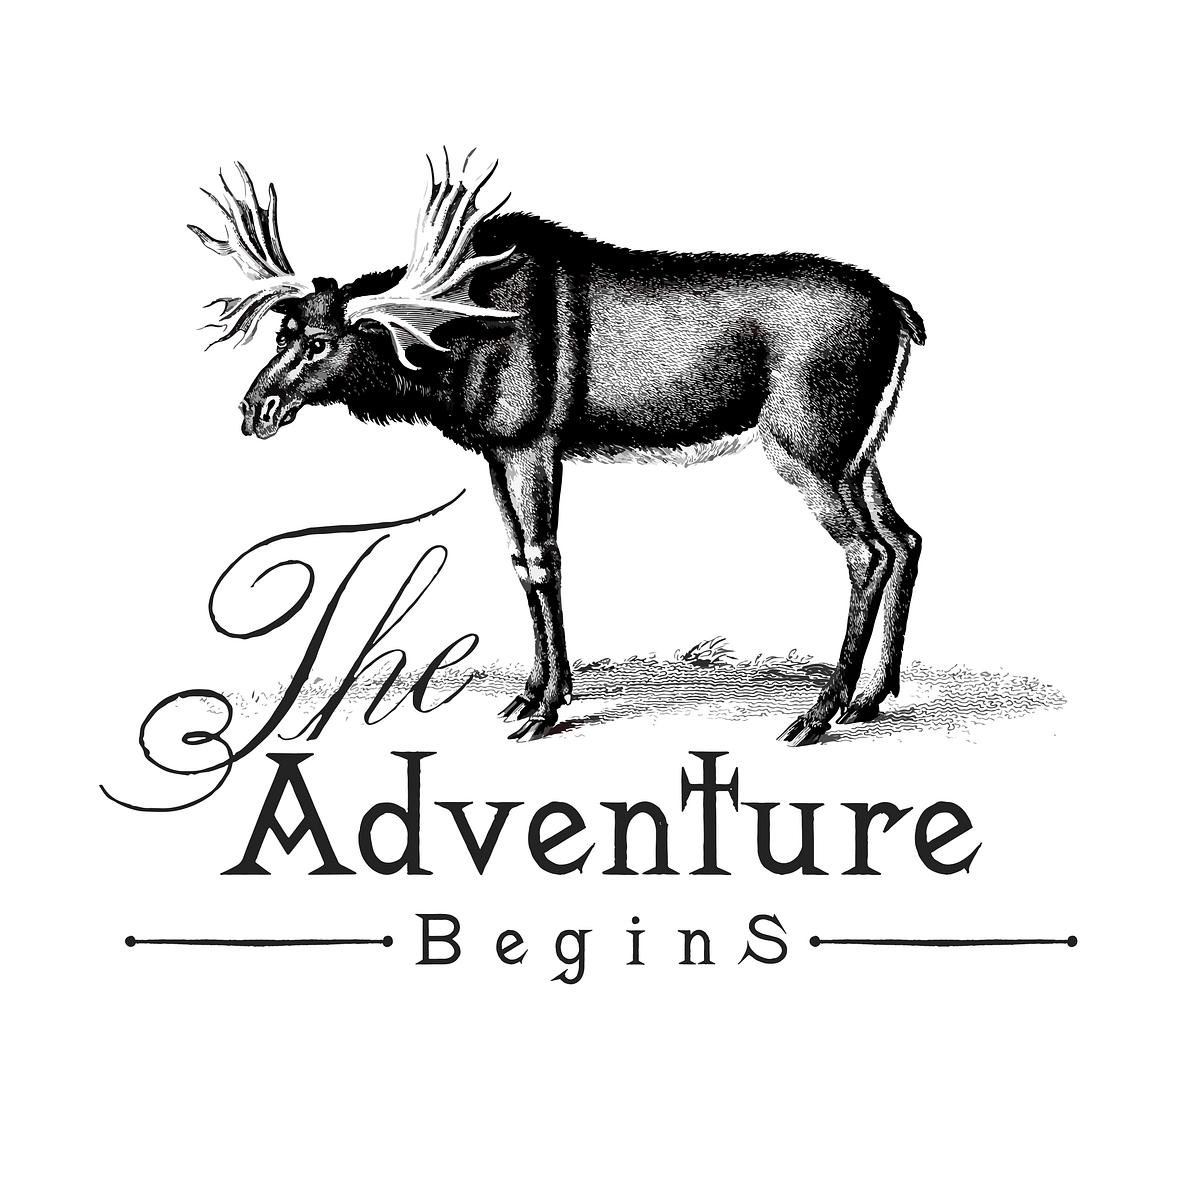 Collection of adventure logo design vectors | Free stock illustration ...